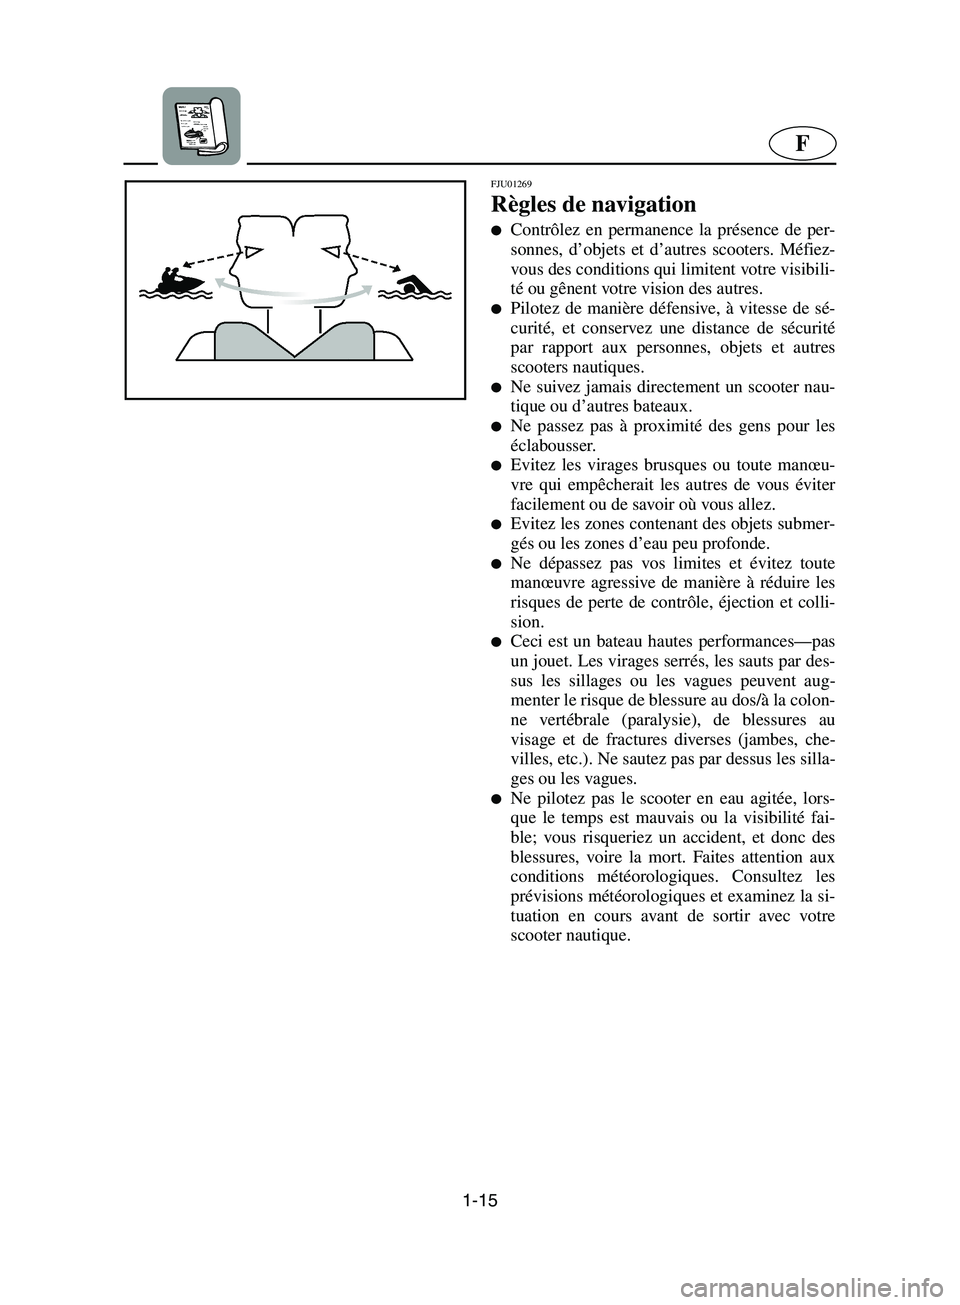 YAMAHA SUPERJET 2002  Manuale de Empleo (in Spanish) 1-15
F
FJU01269 
Règles de navigation  
Contrôlez en permanence la présence de per-
sonnes, d’objets et d’autres scooters. Méfiez-
vous des conditions qui limitent votre visibili-
té ou gên